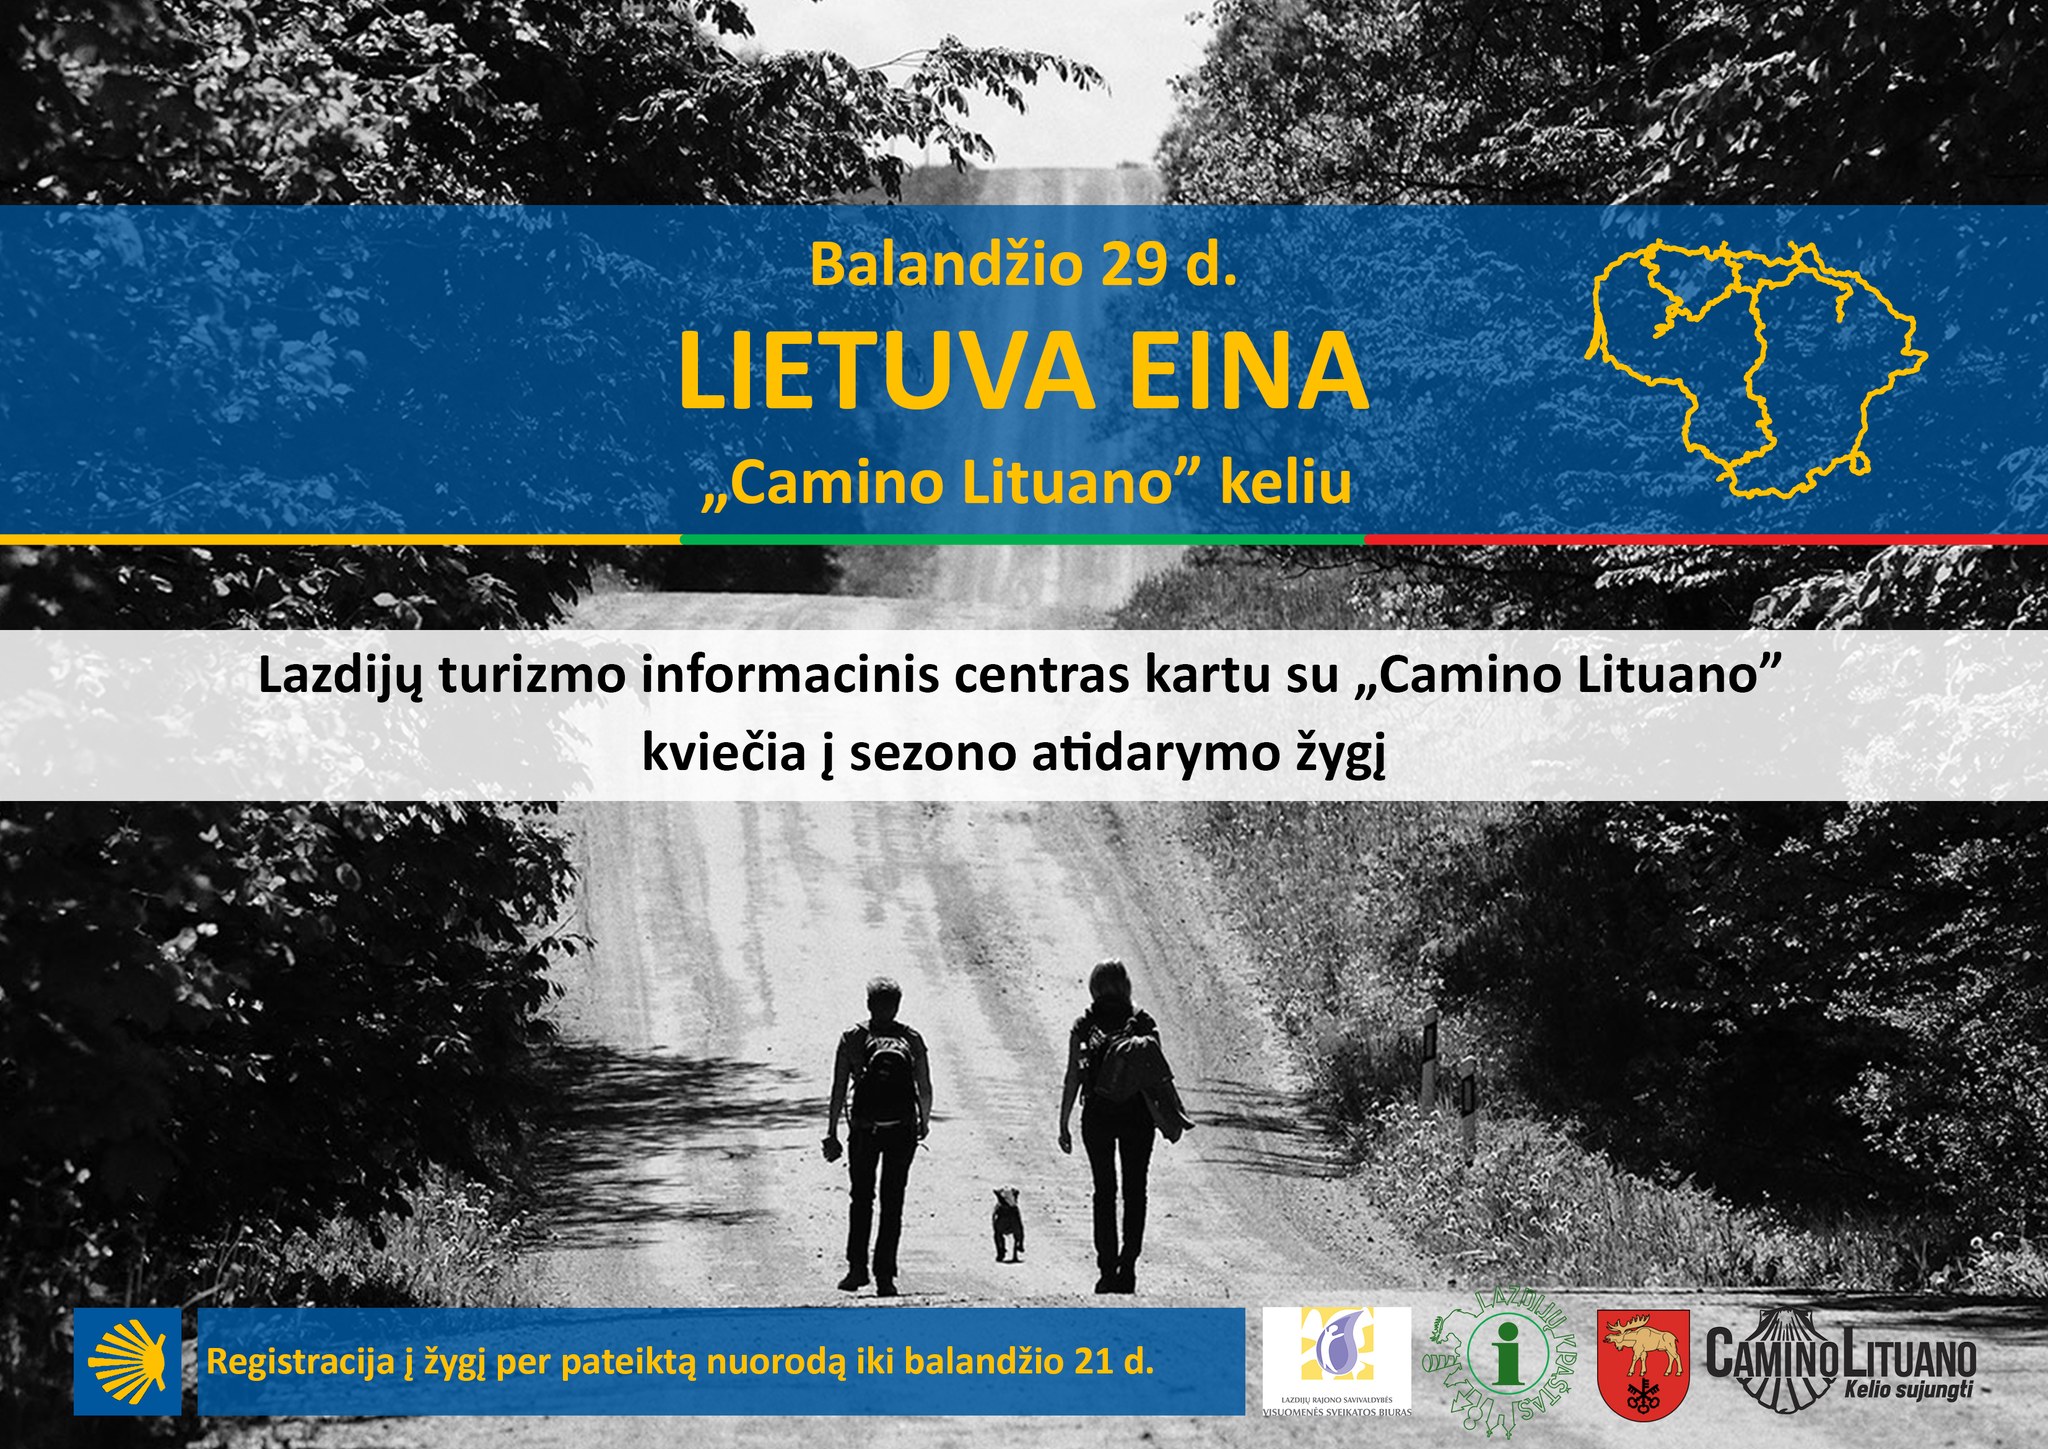 Camino Lituano